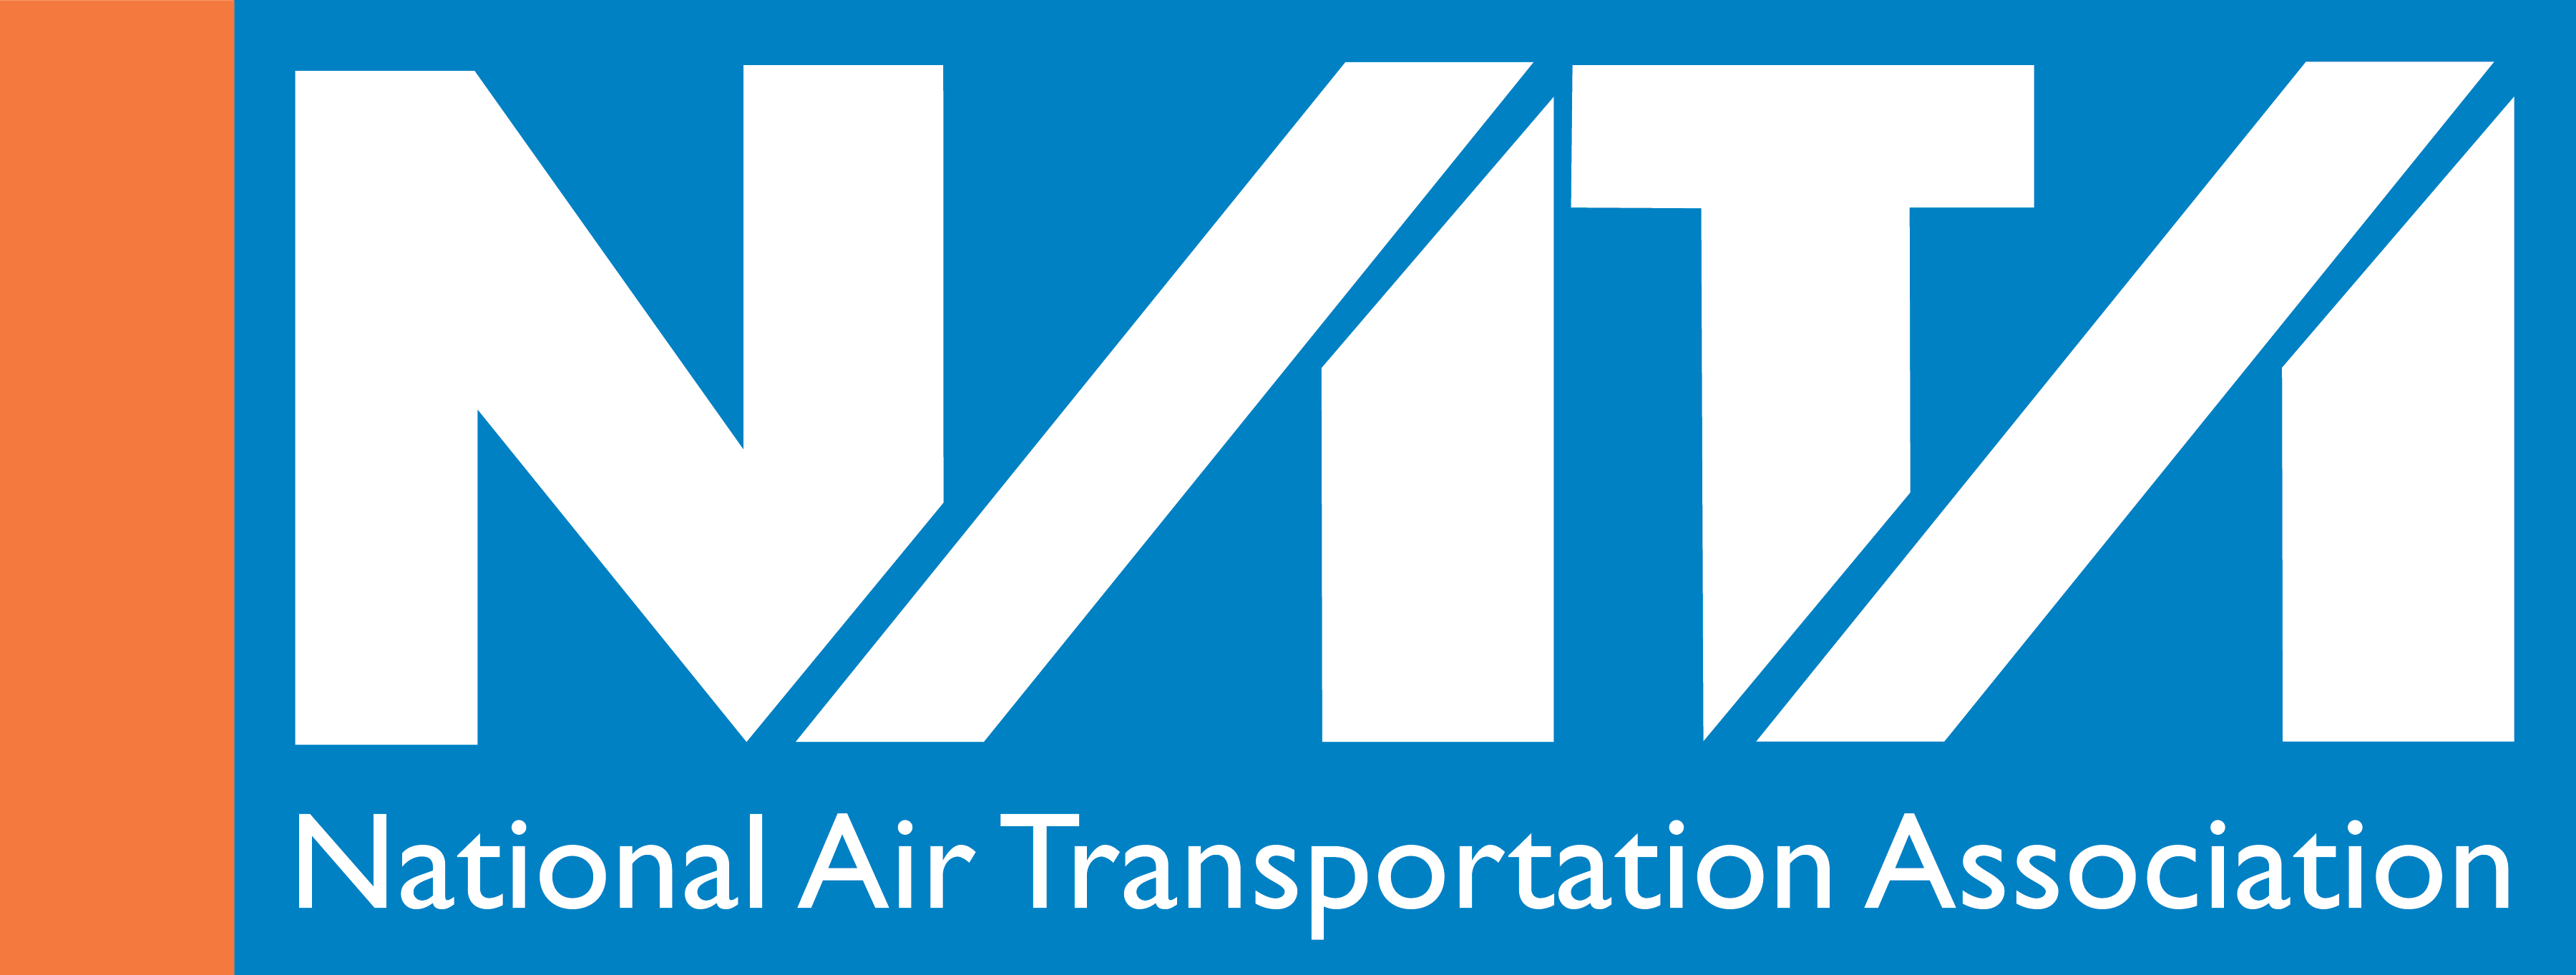 Logotipo Nacional de Transporte Aéreo. Aeromedevac está certificada por la NATA